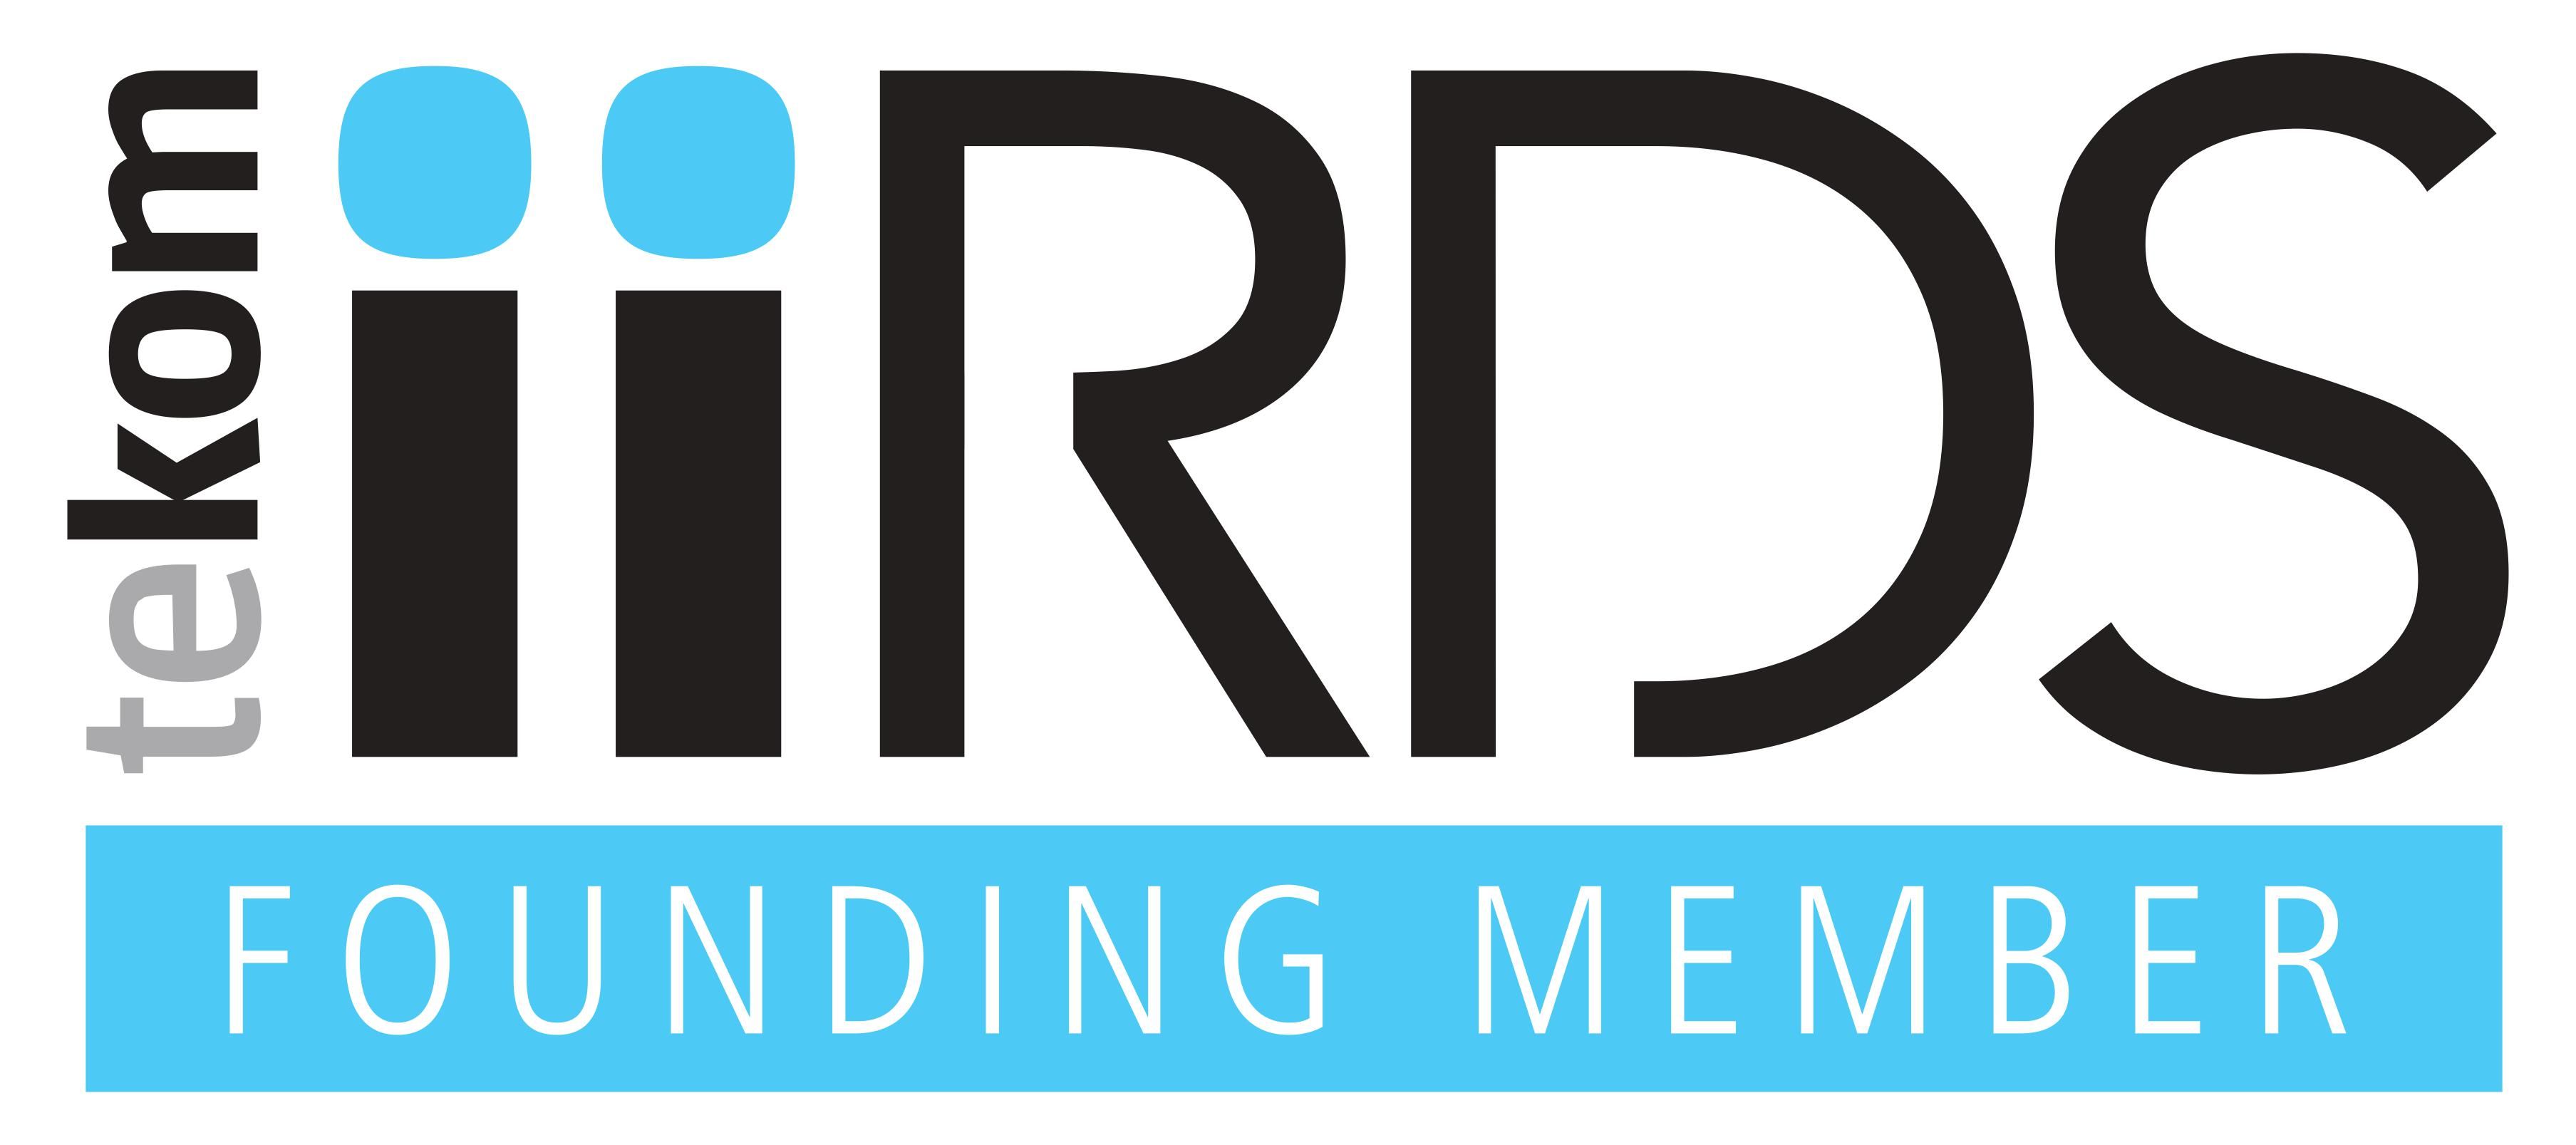 gds is founding member of the iiRDS Consortium